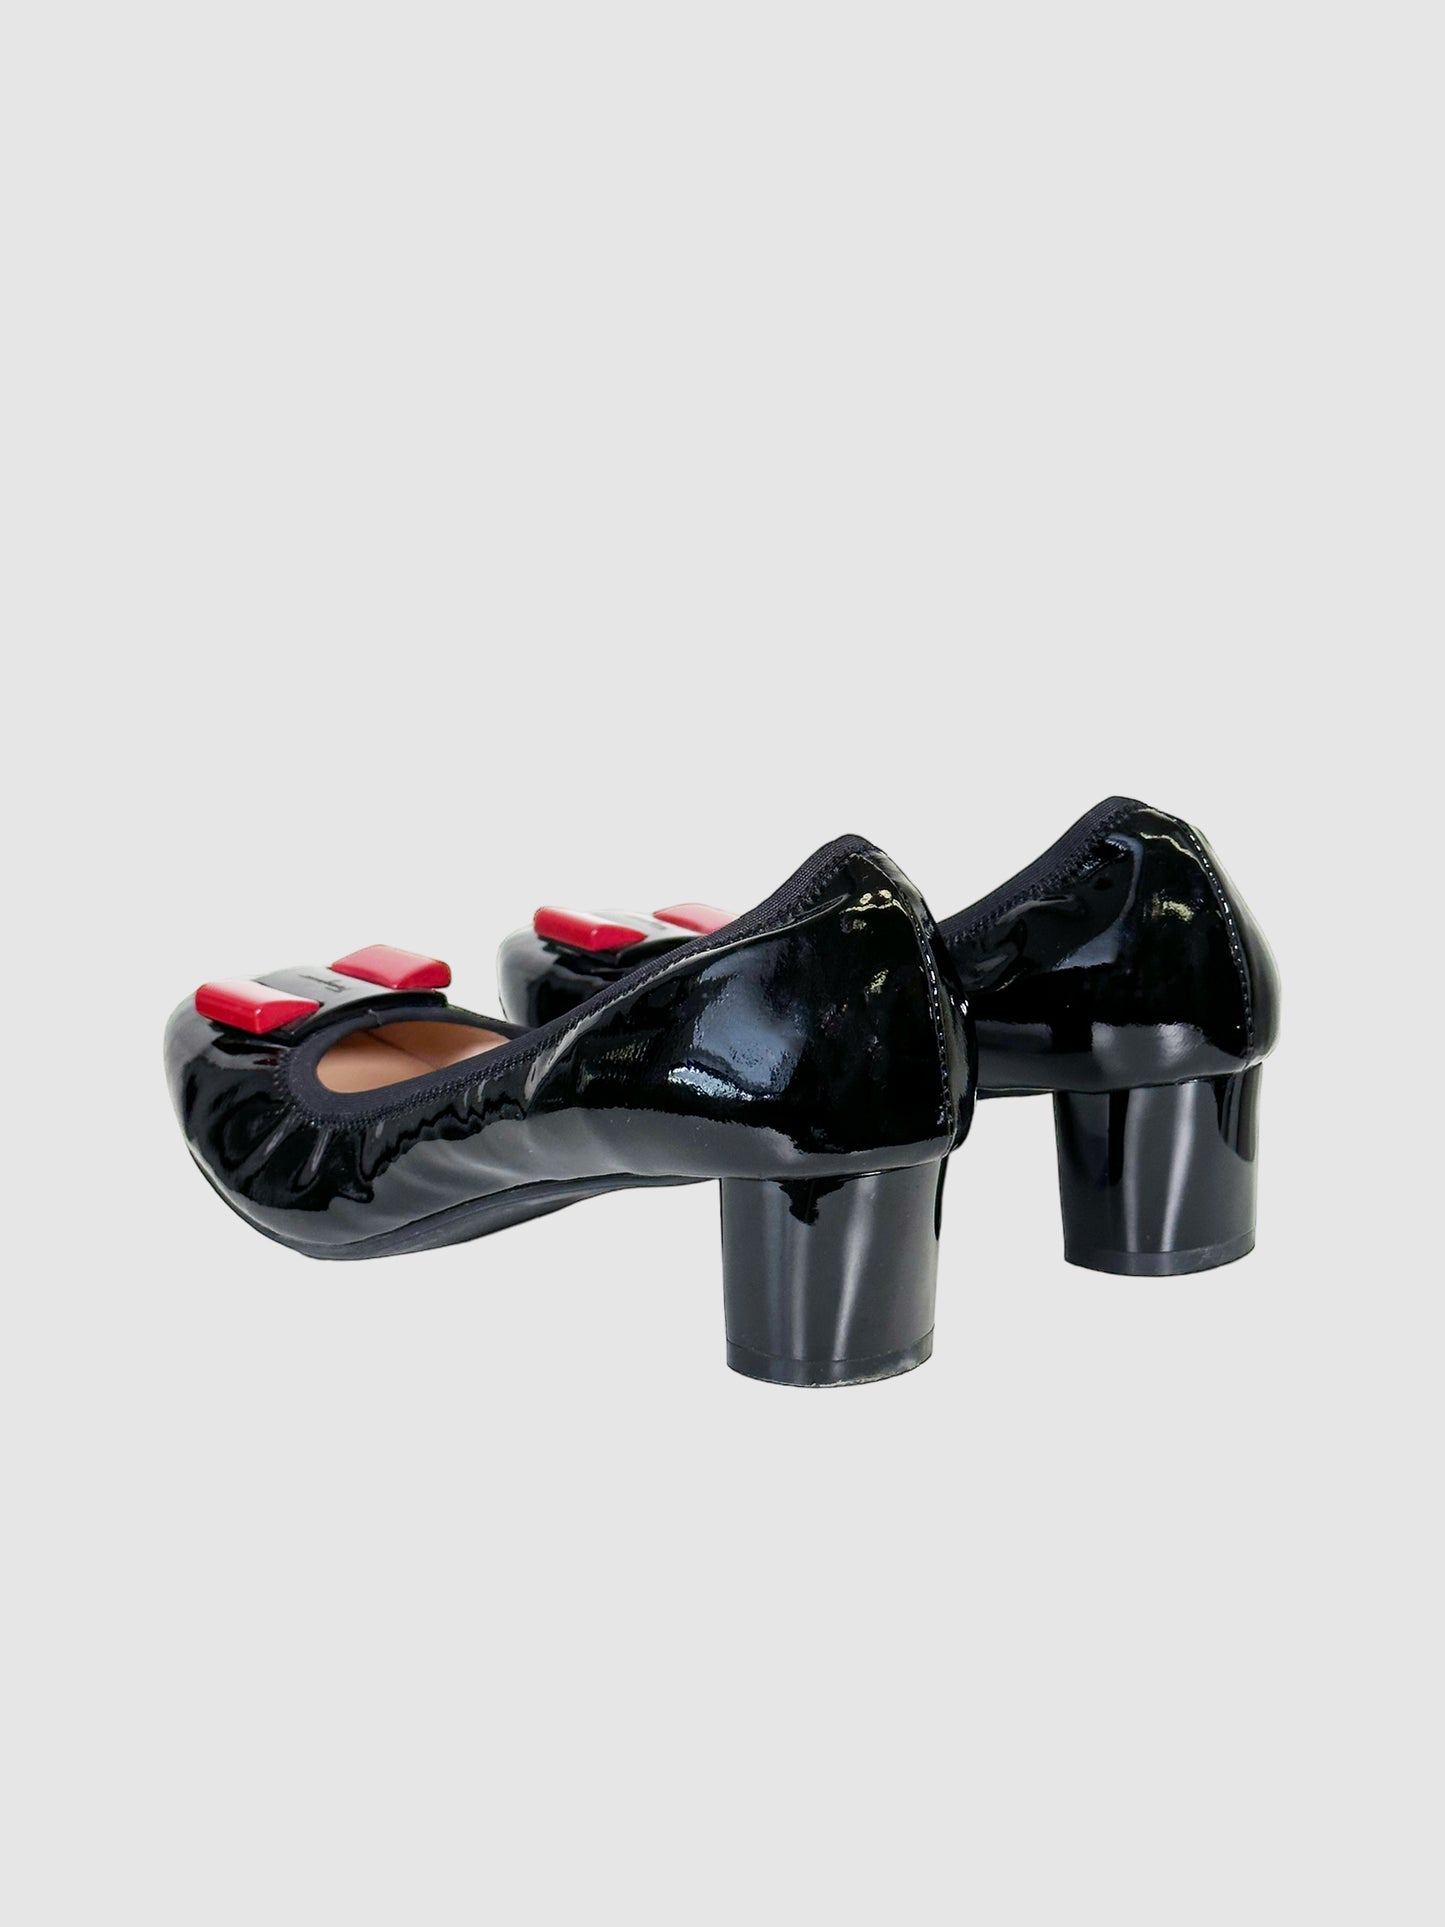 Salvatore Ferragamo Leather Bow Accents Pumps - Size 10